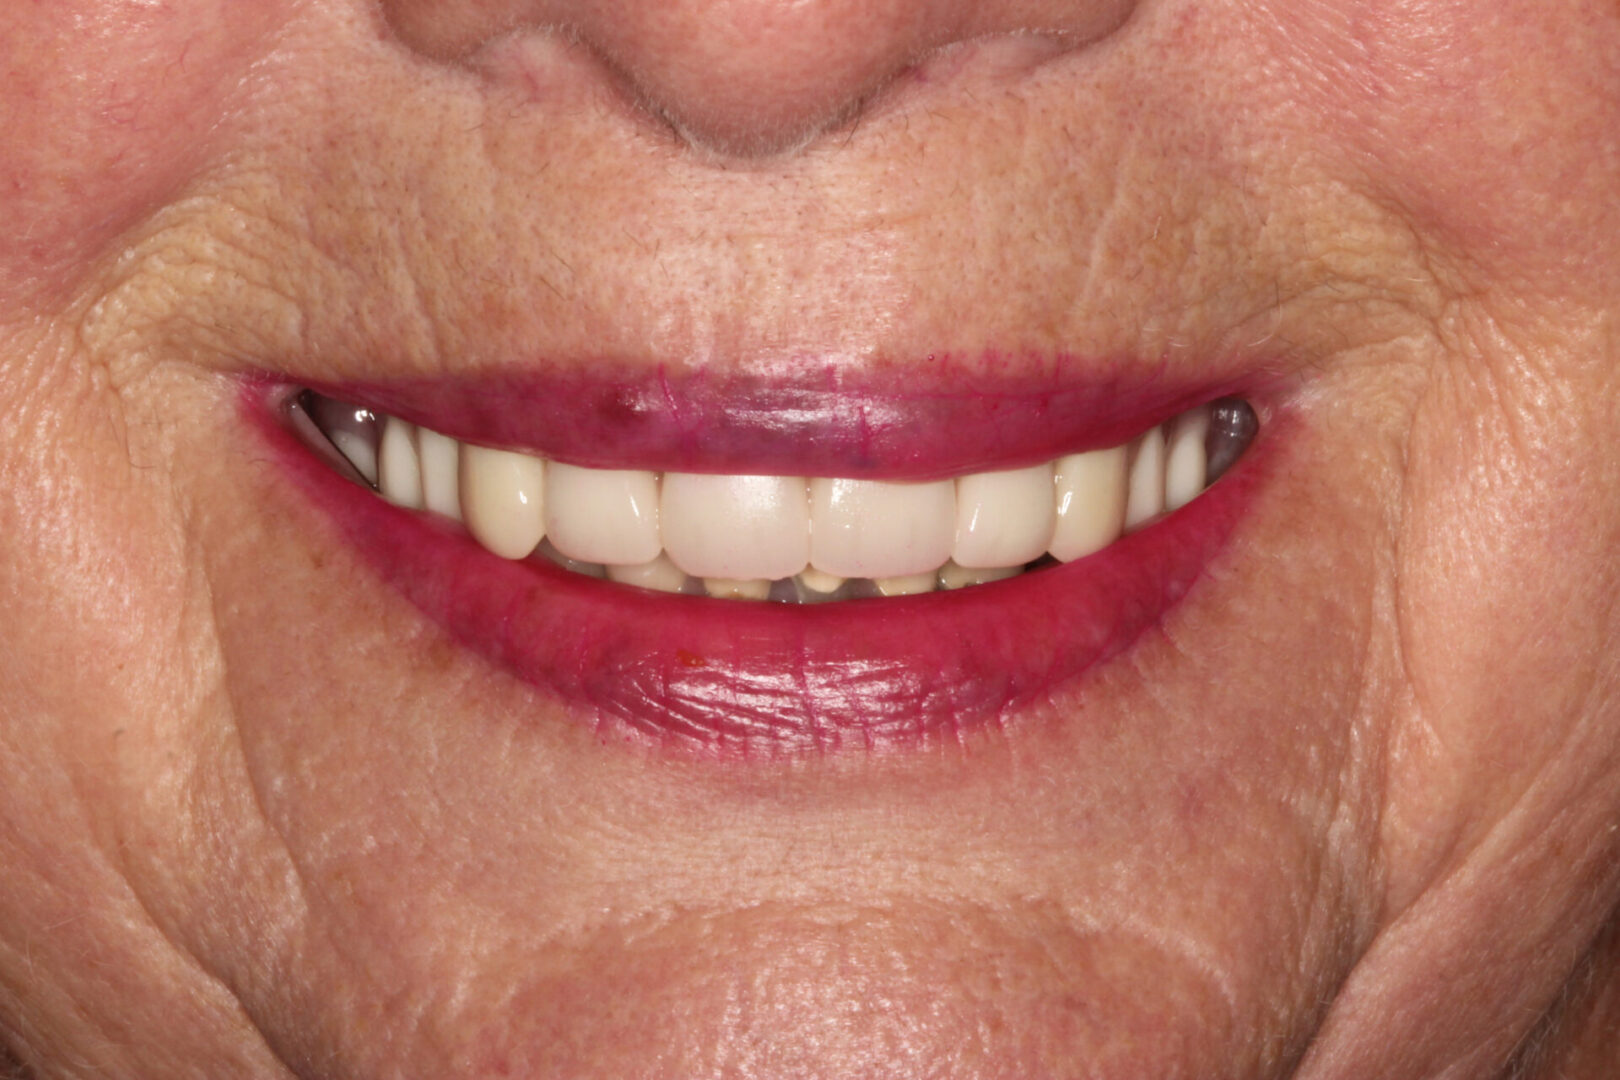 Teeth needing restorations and dentures